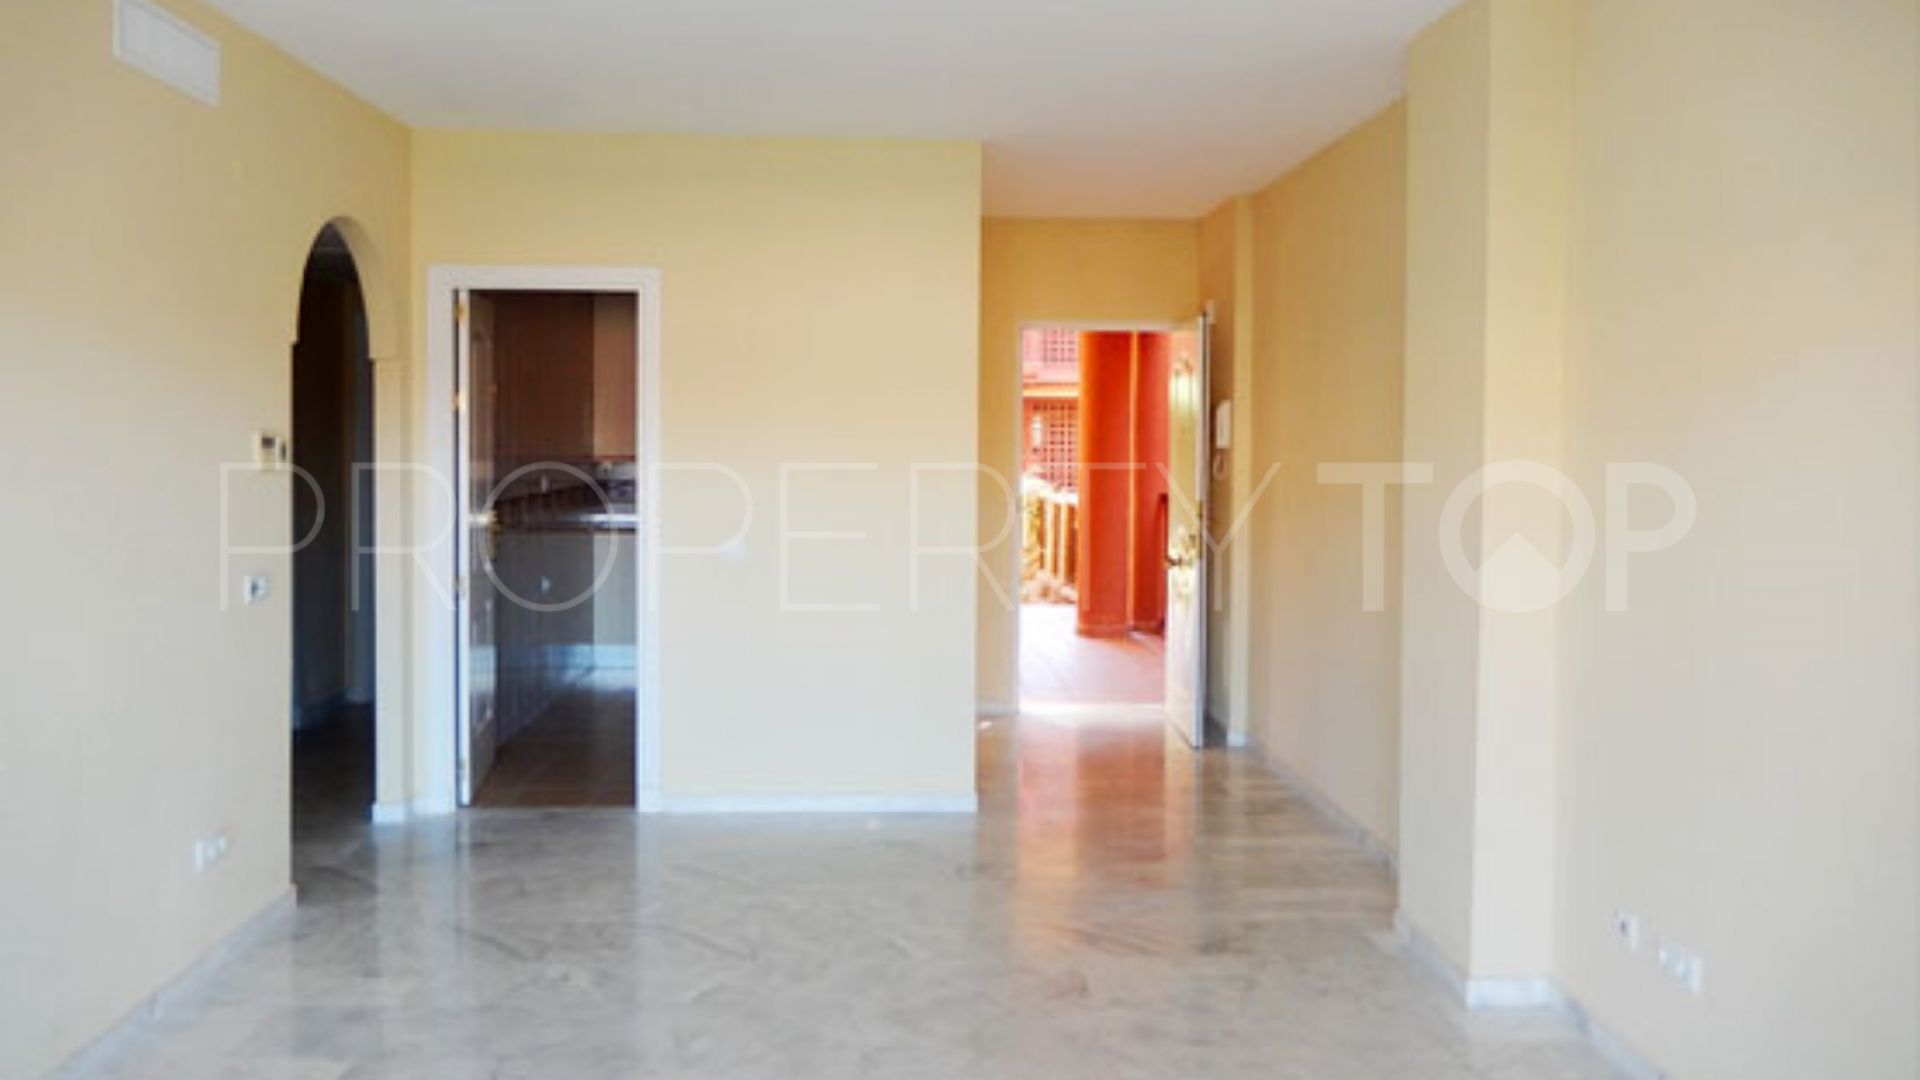 Apartment for sale in La Reserva de Marbella with 2 bedrooms